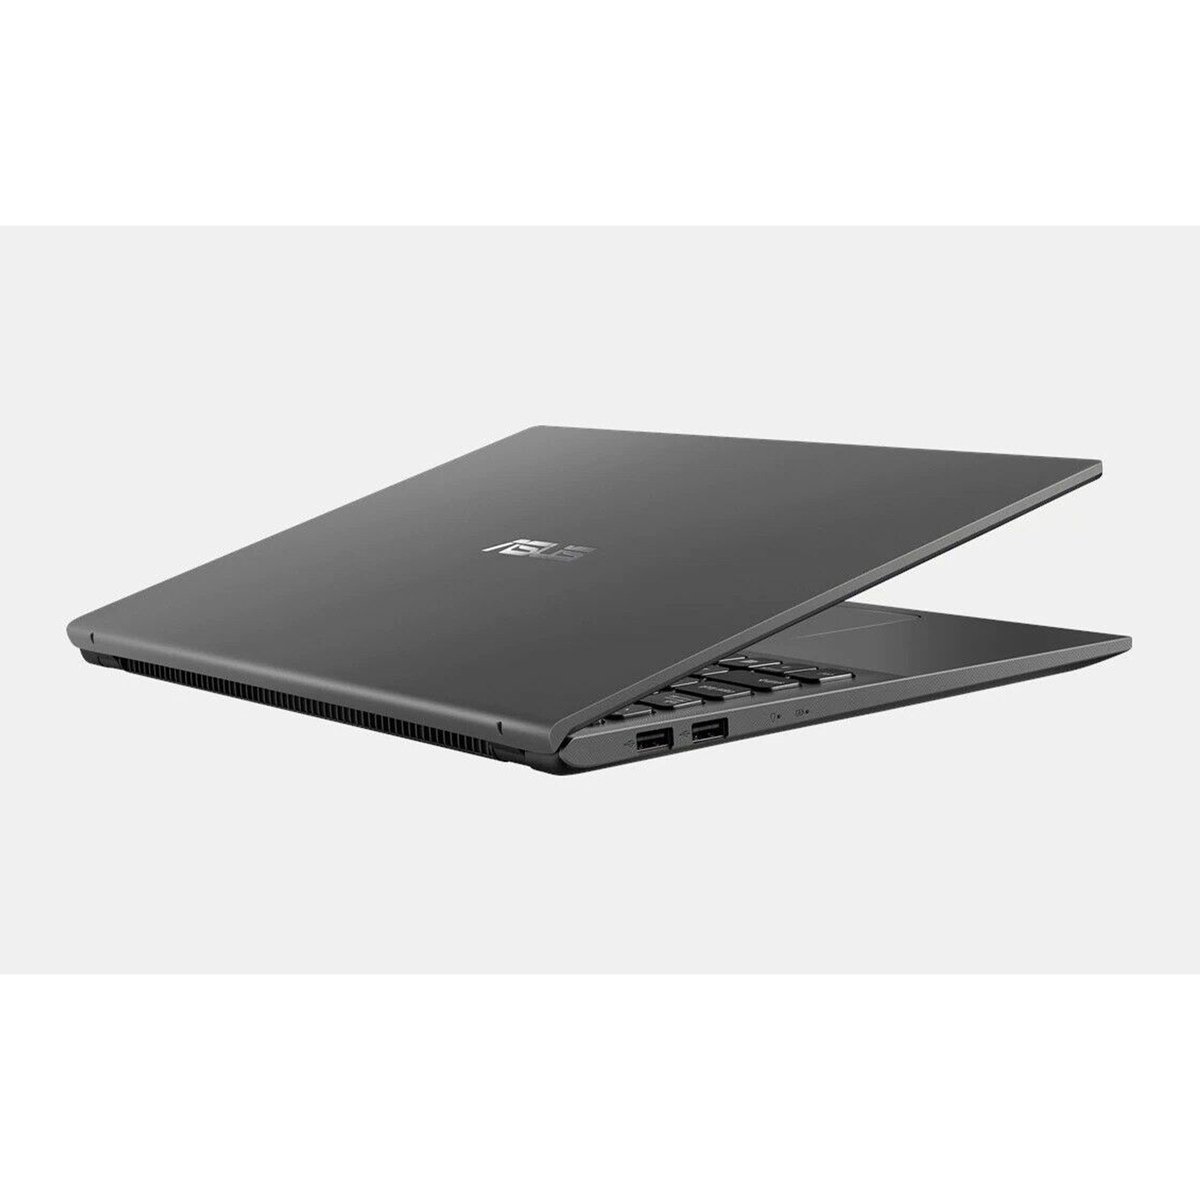 Asus VivoBook R Laptop R564JA-UH31T - 15.6” FHD Touch Screen Display, 10th Gen Intel Core i3 -1005G1, 4GB RAM, 128GB SSD, Intel UHD Graphics 620, Slate Gray